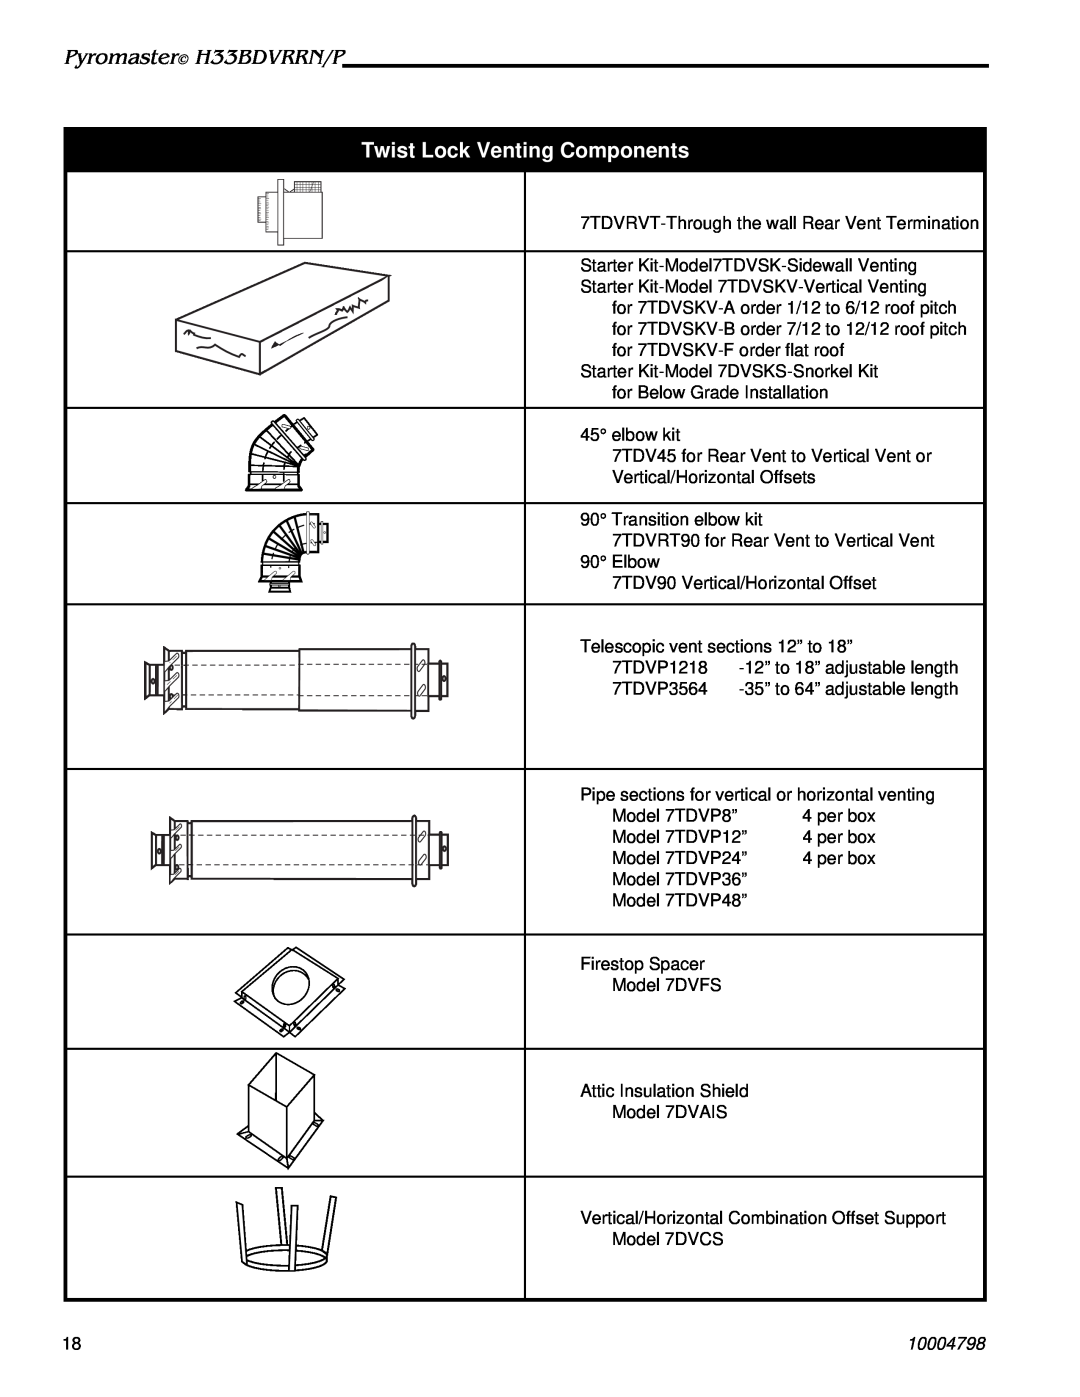 Vermont Casting H33BDVRRNP manual Twist Lock Venting Components, Pyromaster H33BDVRRN/P, 10004798 